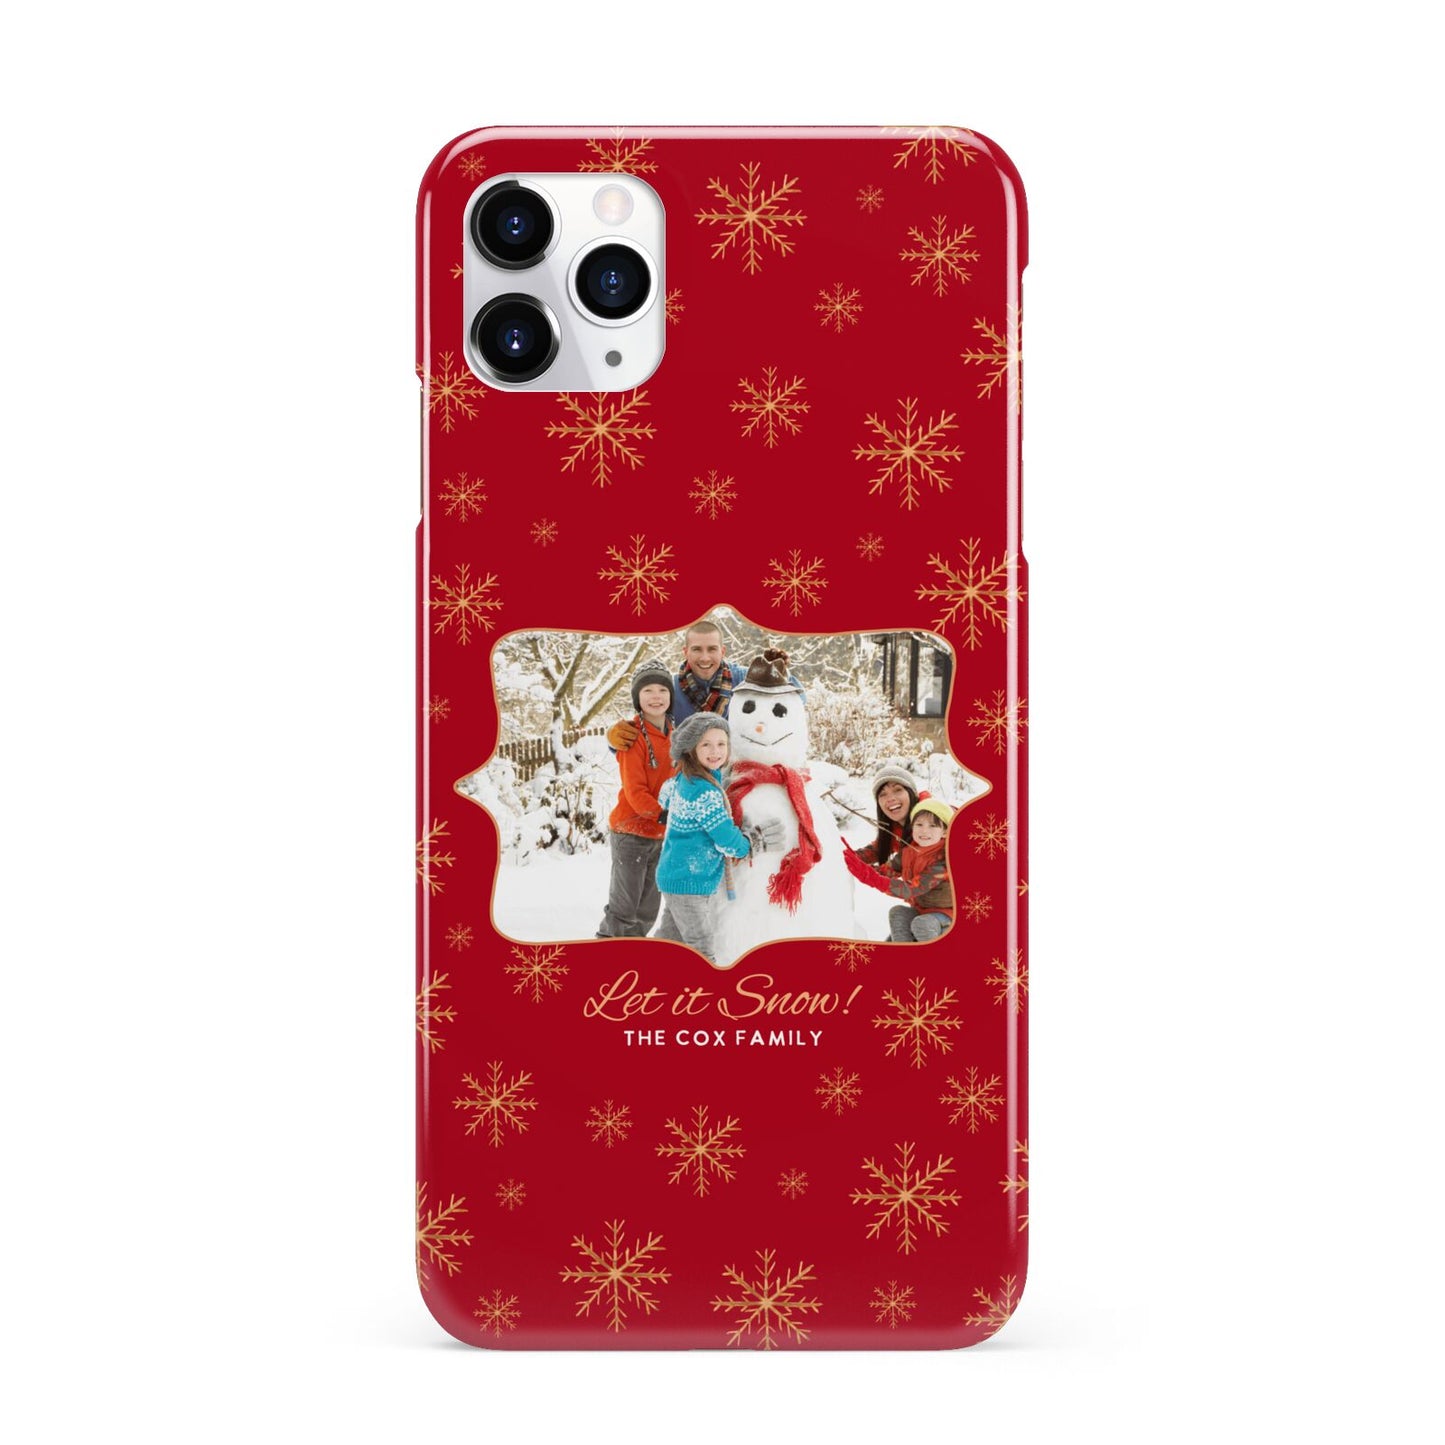 Let it Snow Christmas Photo Upload iPhone 11 Pro Max 3D Snap Case